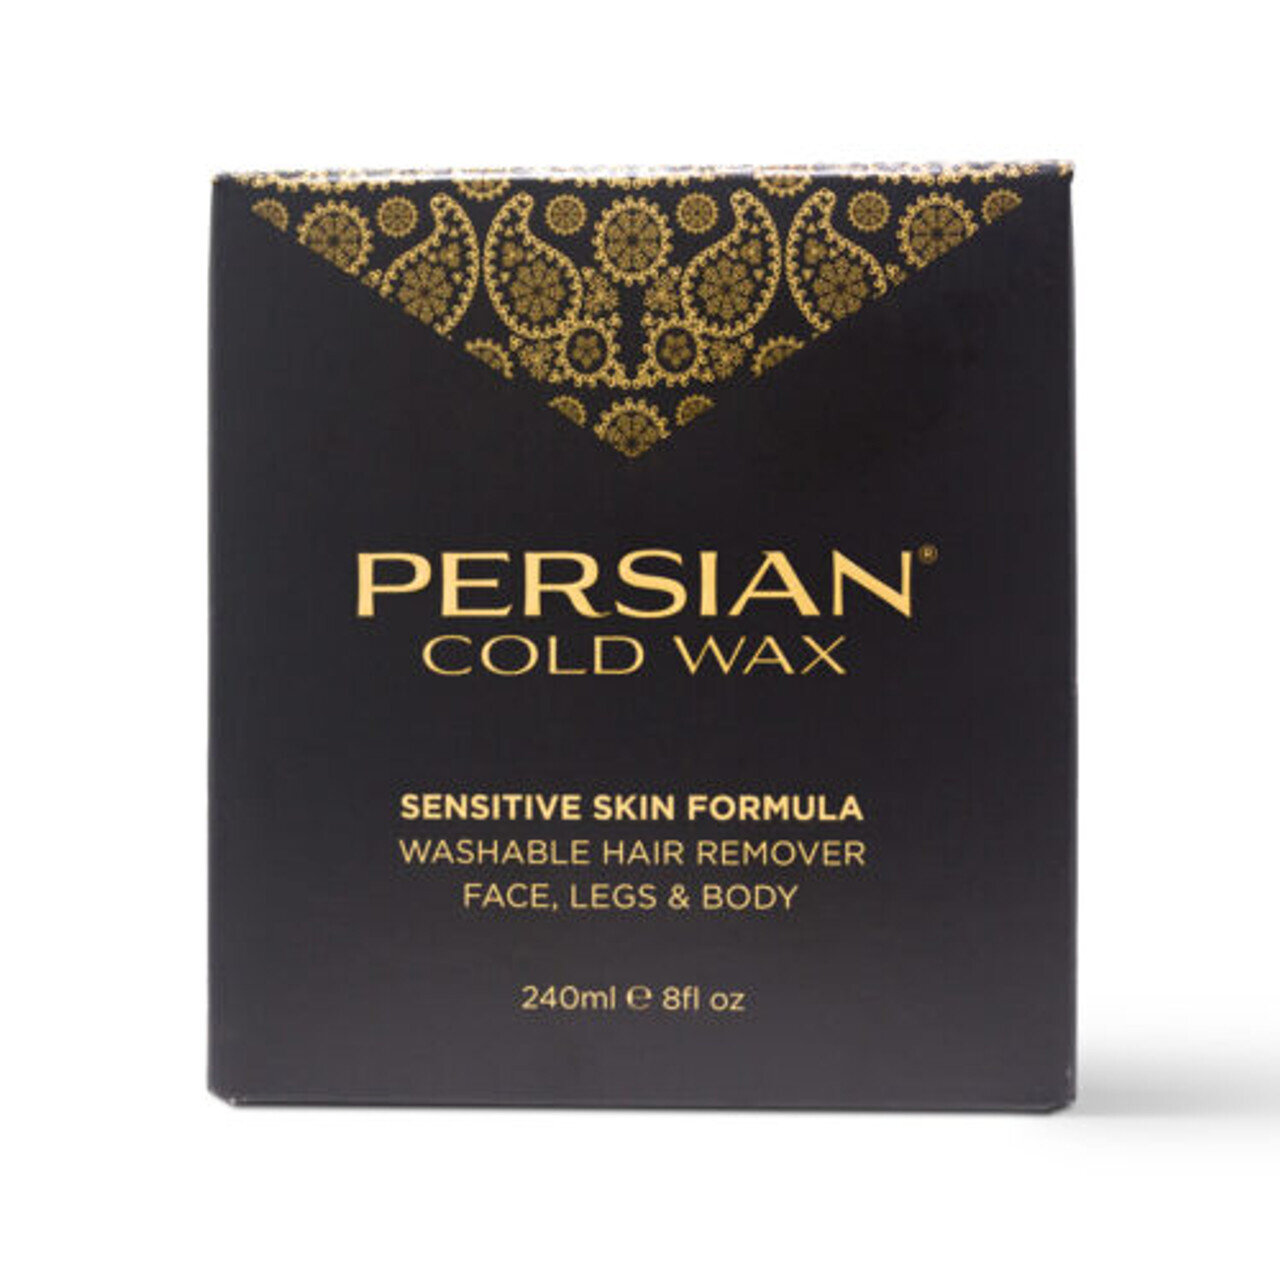 Persian Cold Wax, Sensitive Skin Formula, Face, Legs & Body, 240ml